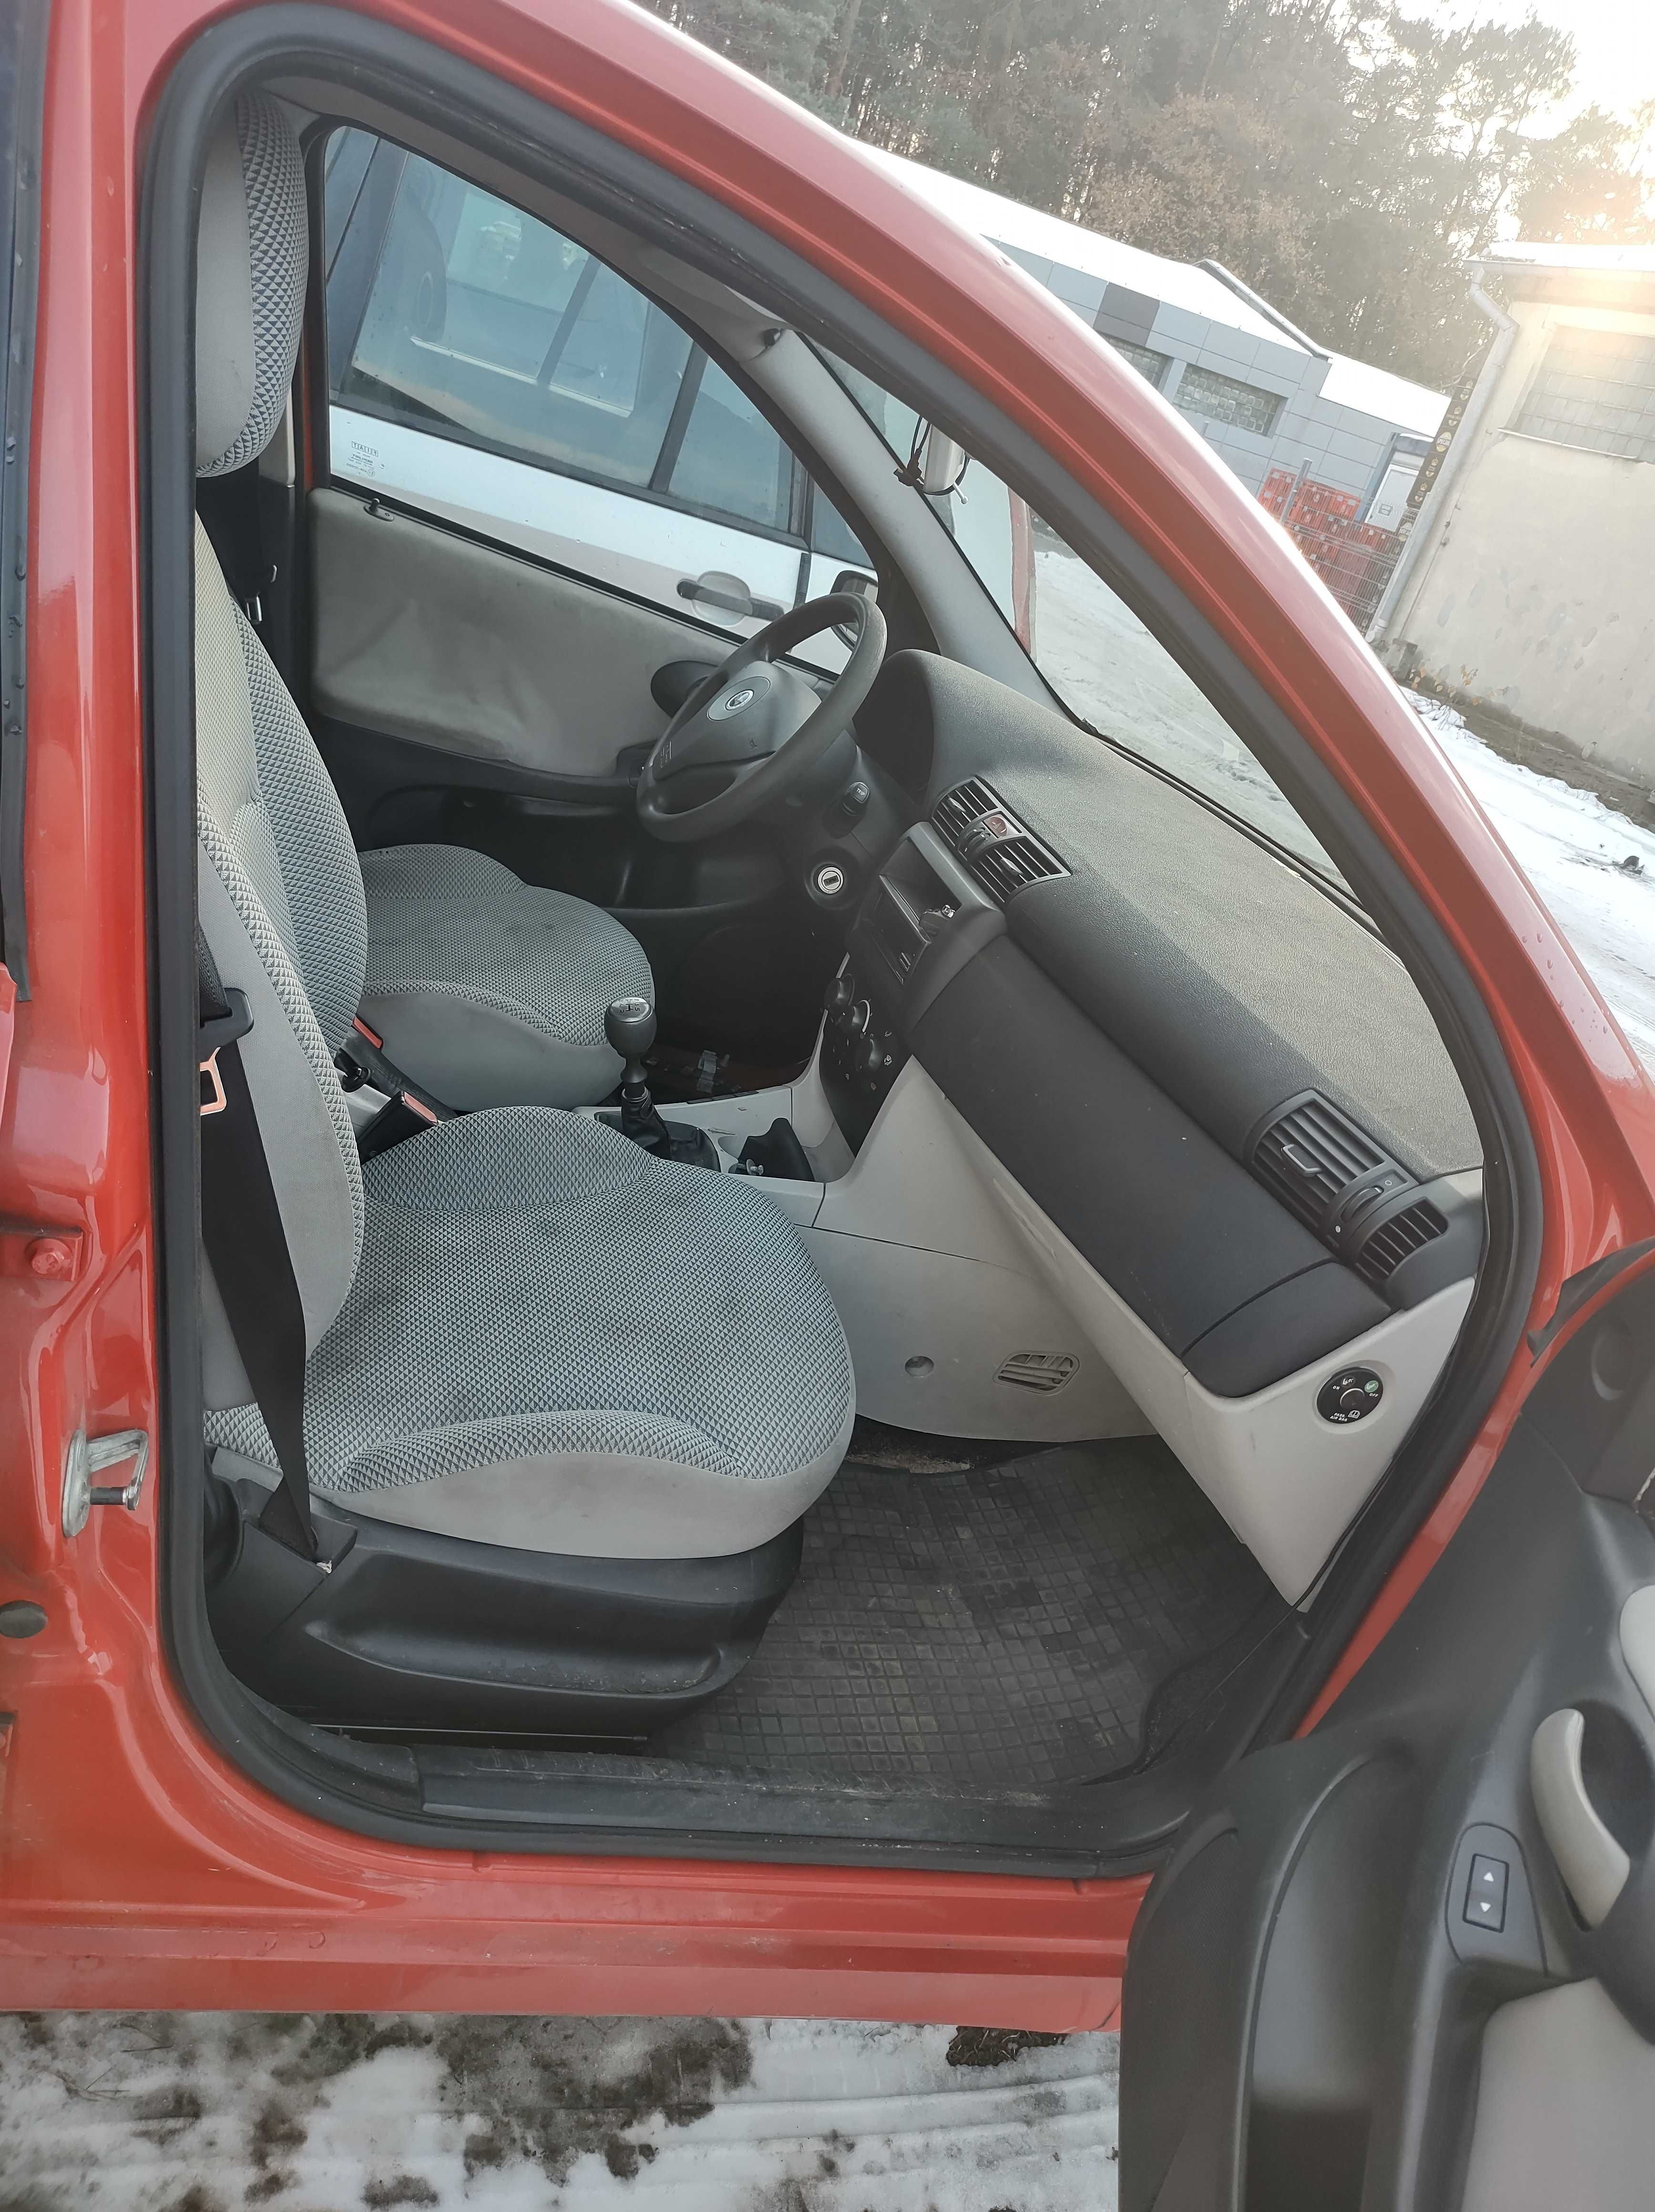 Fiat Stilo Hatchback 1,6 103KM 2005/2006 benzyna